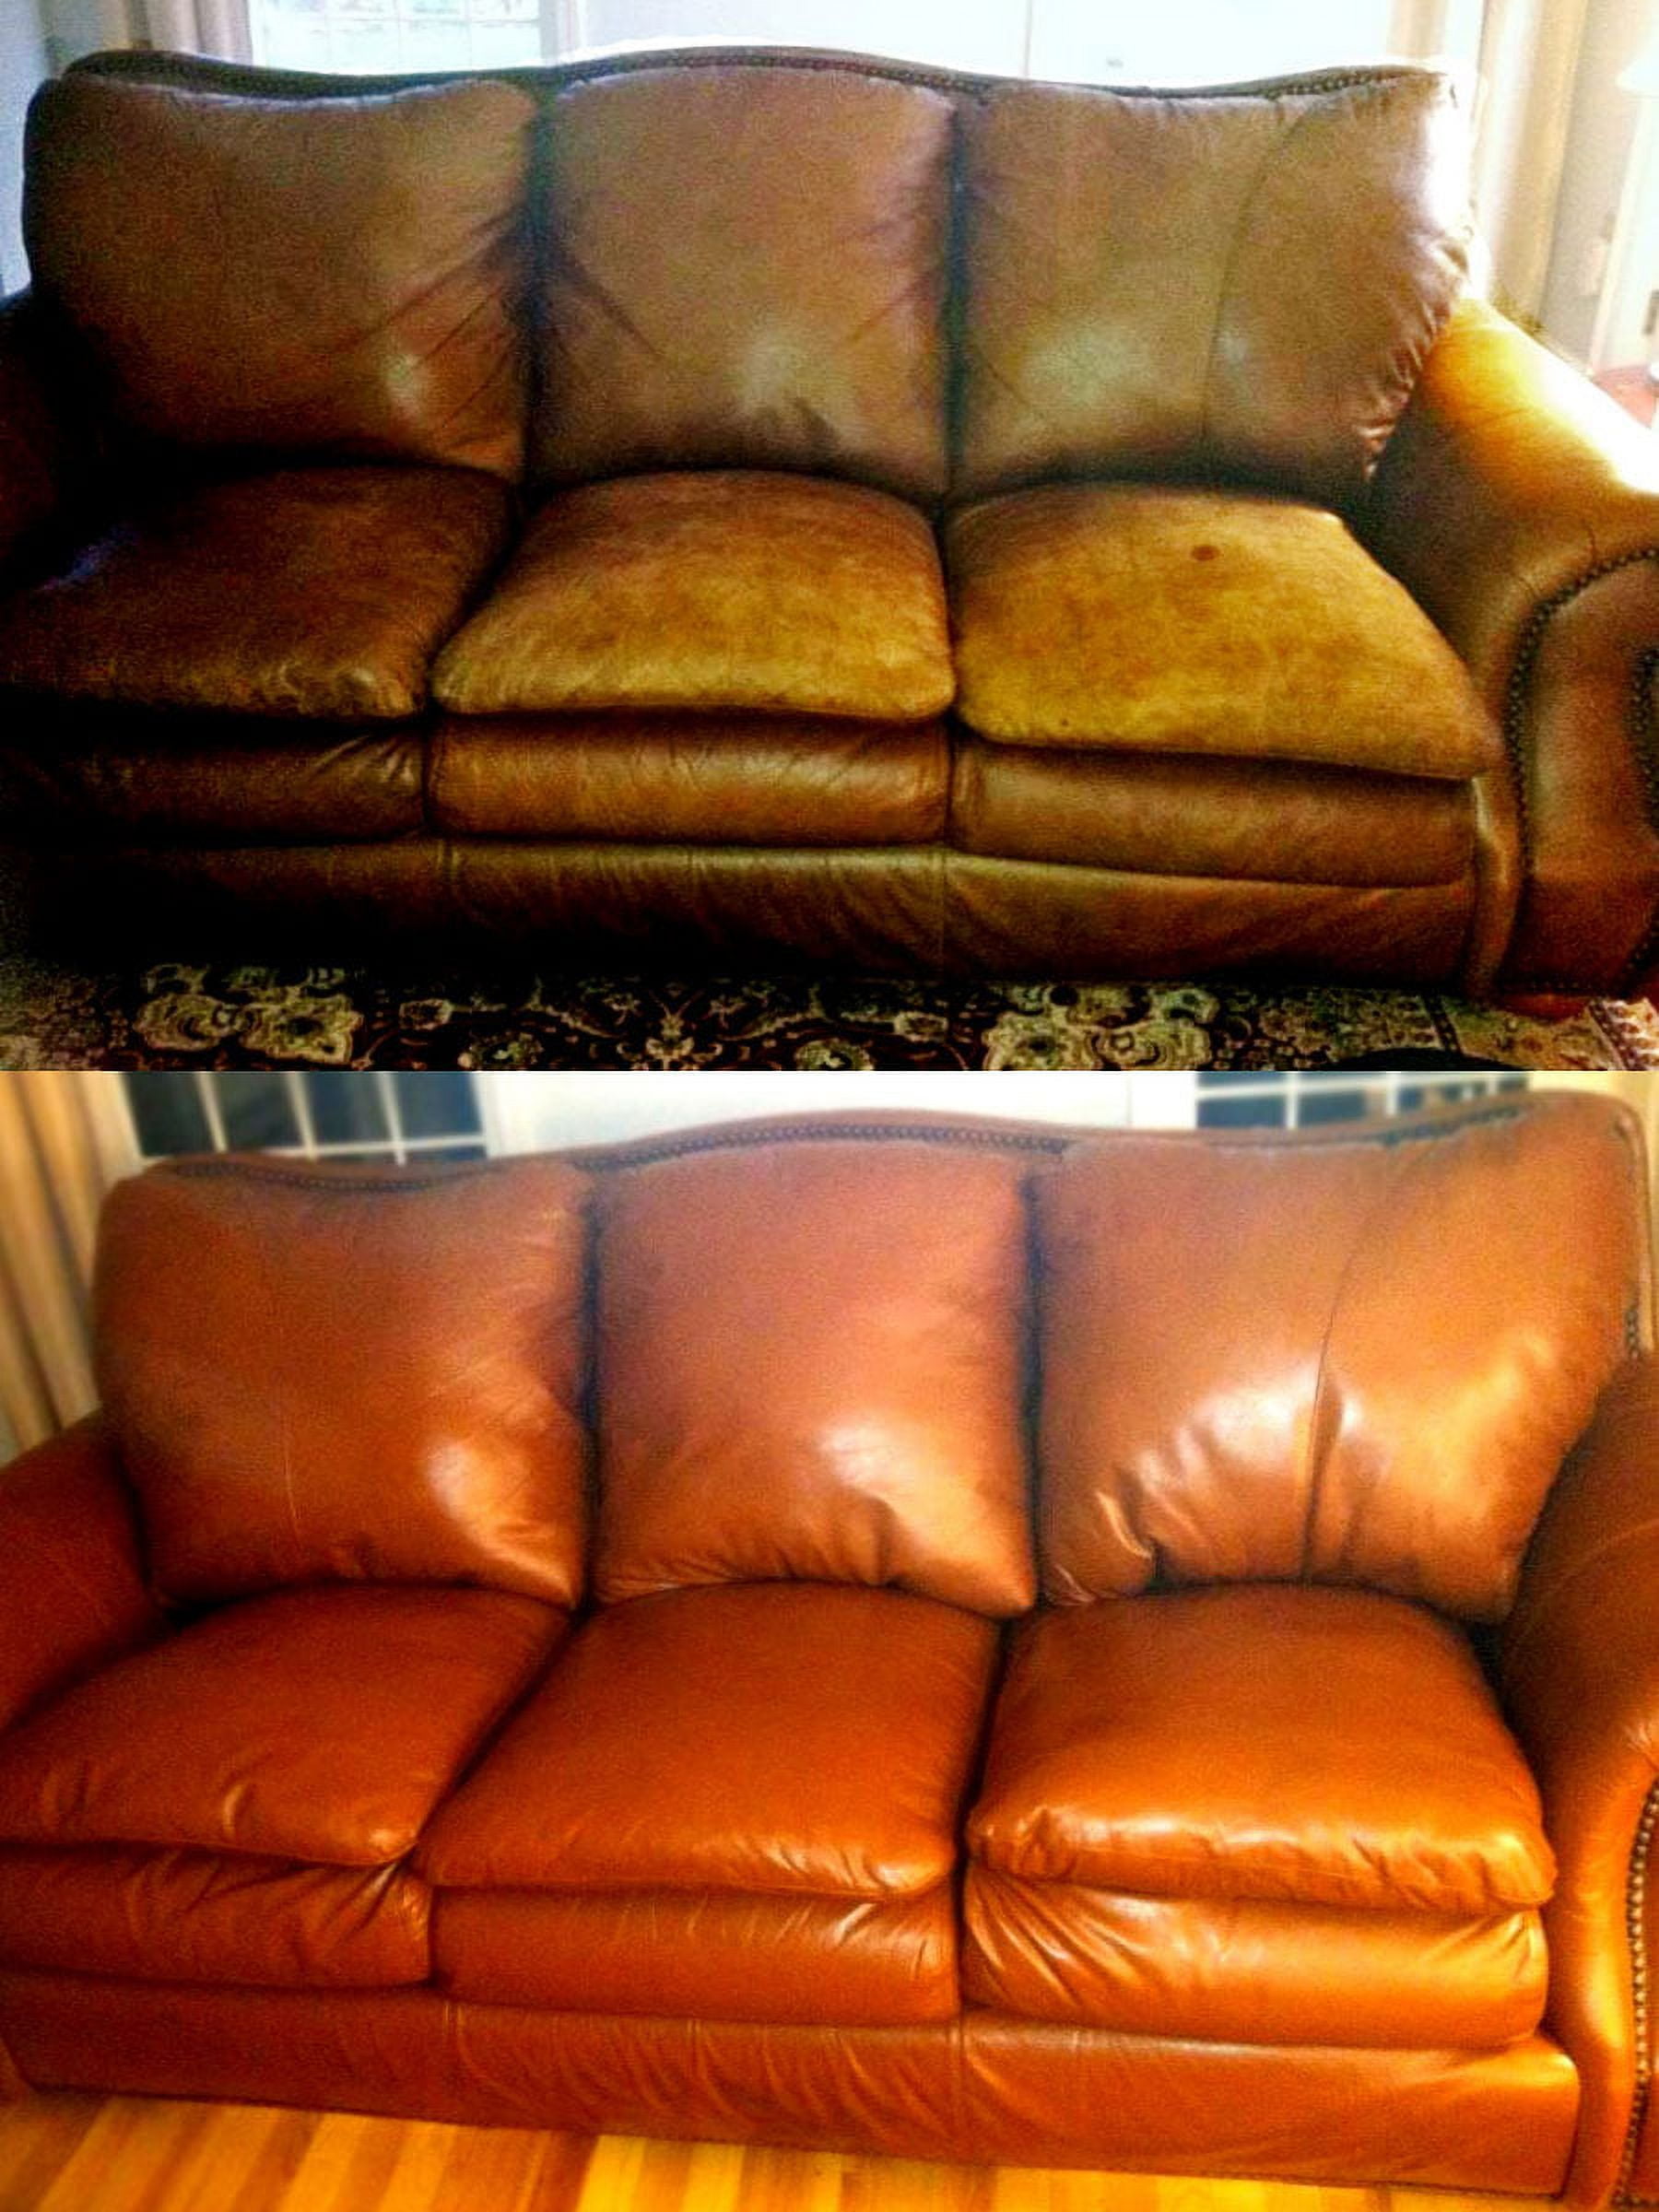 Furniture Leather Max MEGA Repair Kit / Leather Restorer / 8 Oz Refinish 2  Oz Conditioner / 4 Oz Top Coat / Black and White 1 Oz Color Changer /  Sponge (Dark Brown) 